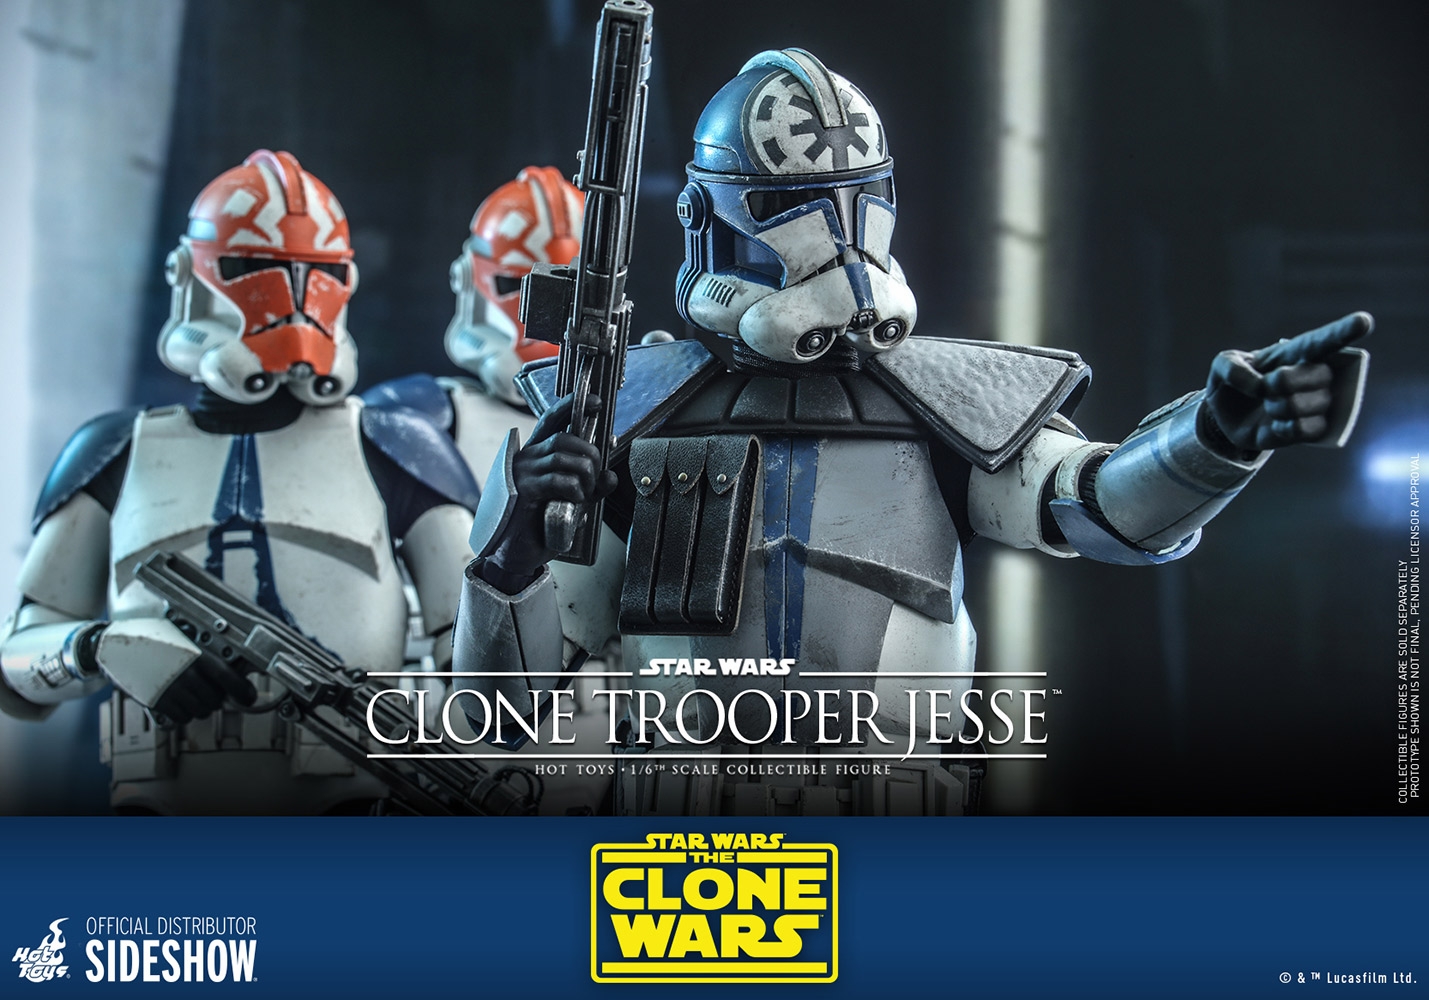 clone-trooper-jesse_star-wars_gallery_61855d96c40cc.jpg